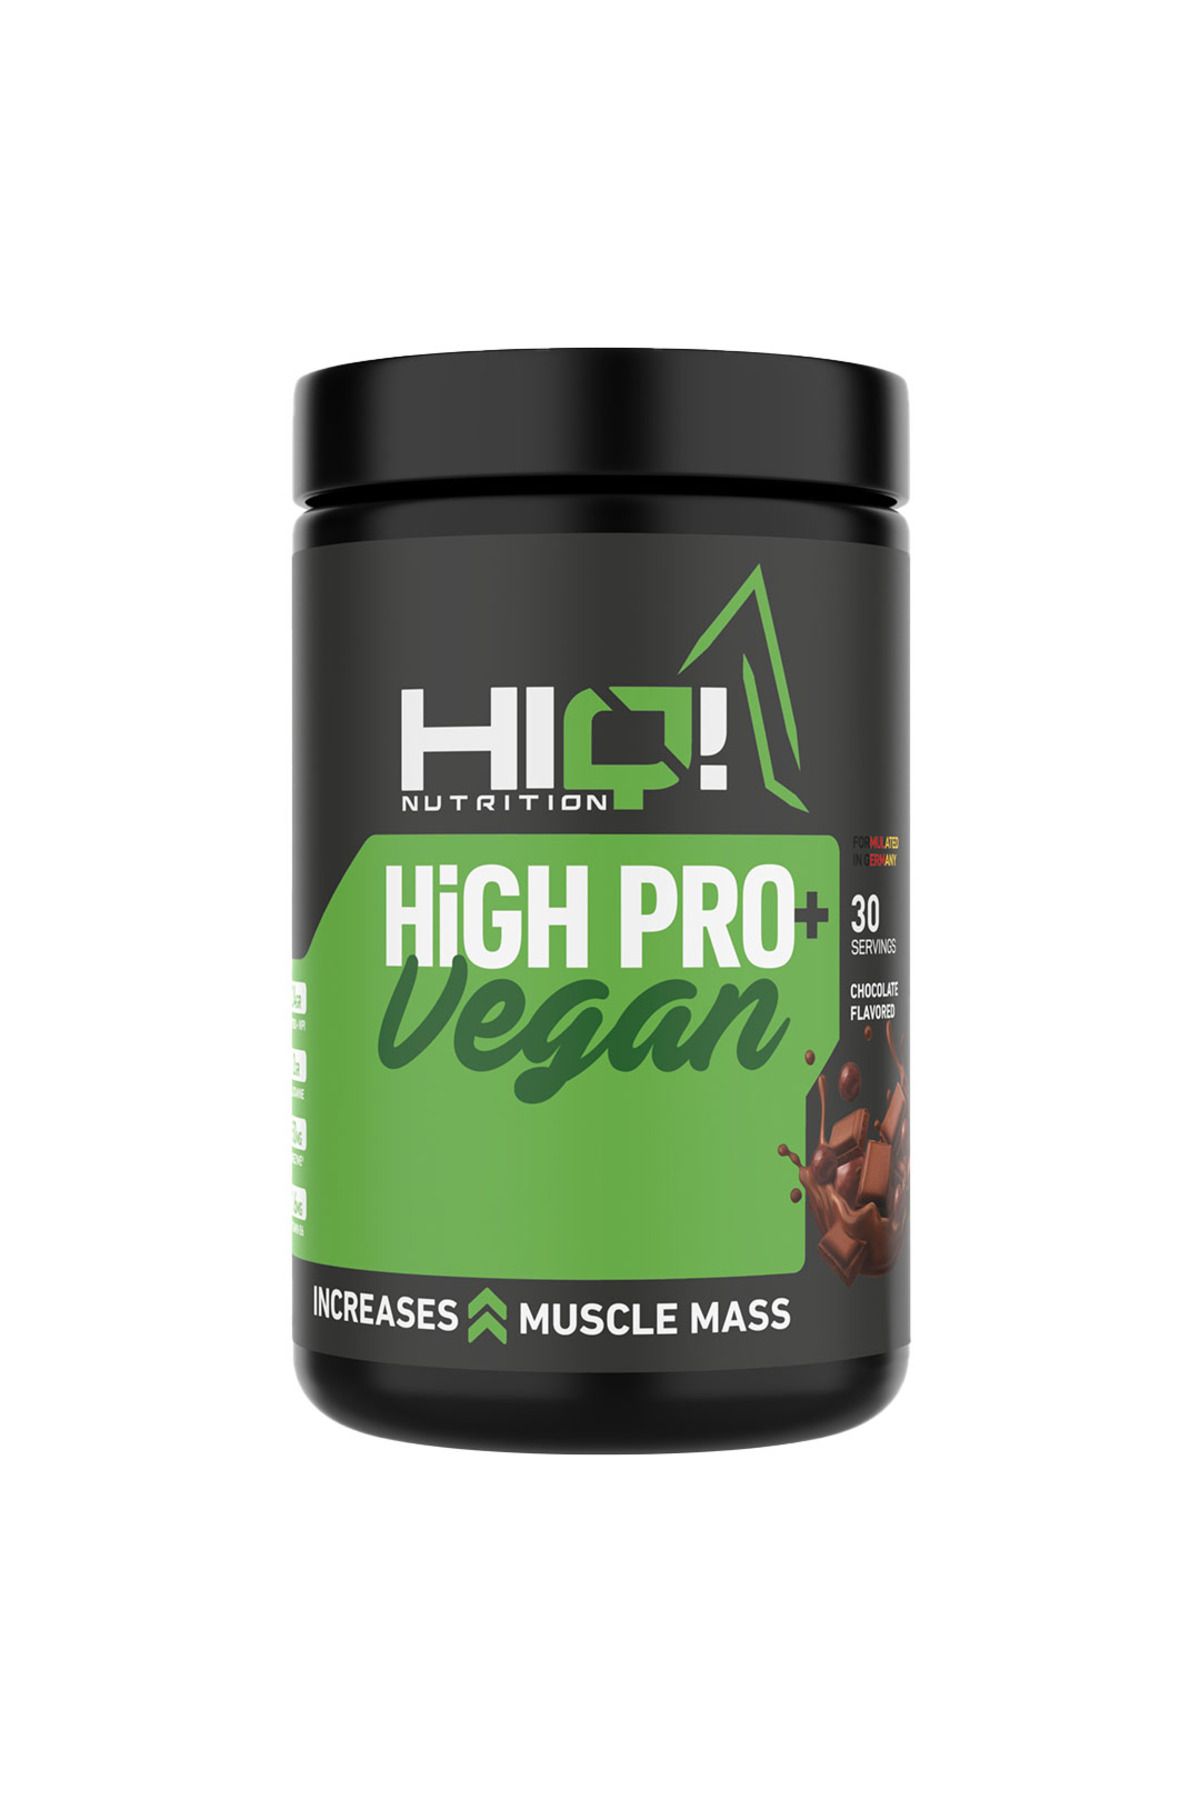 HIQ NUTRITION HIQ High Pro+ Vegan 900gr Chocolate Flavored